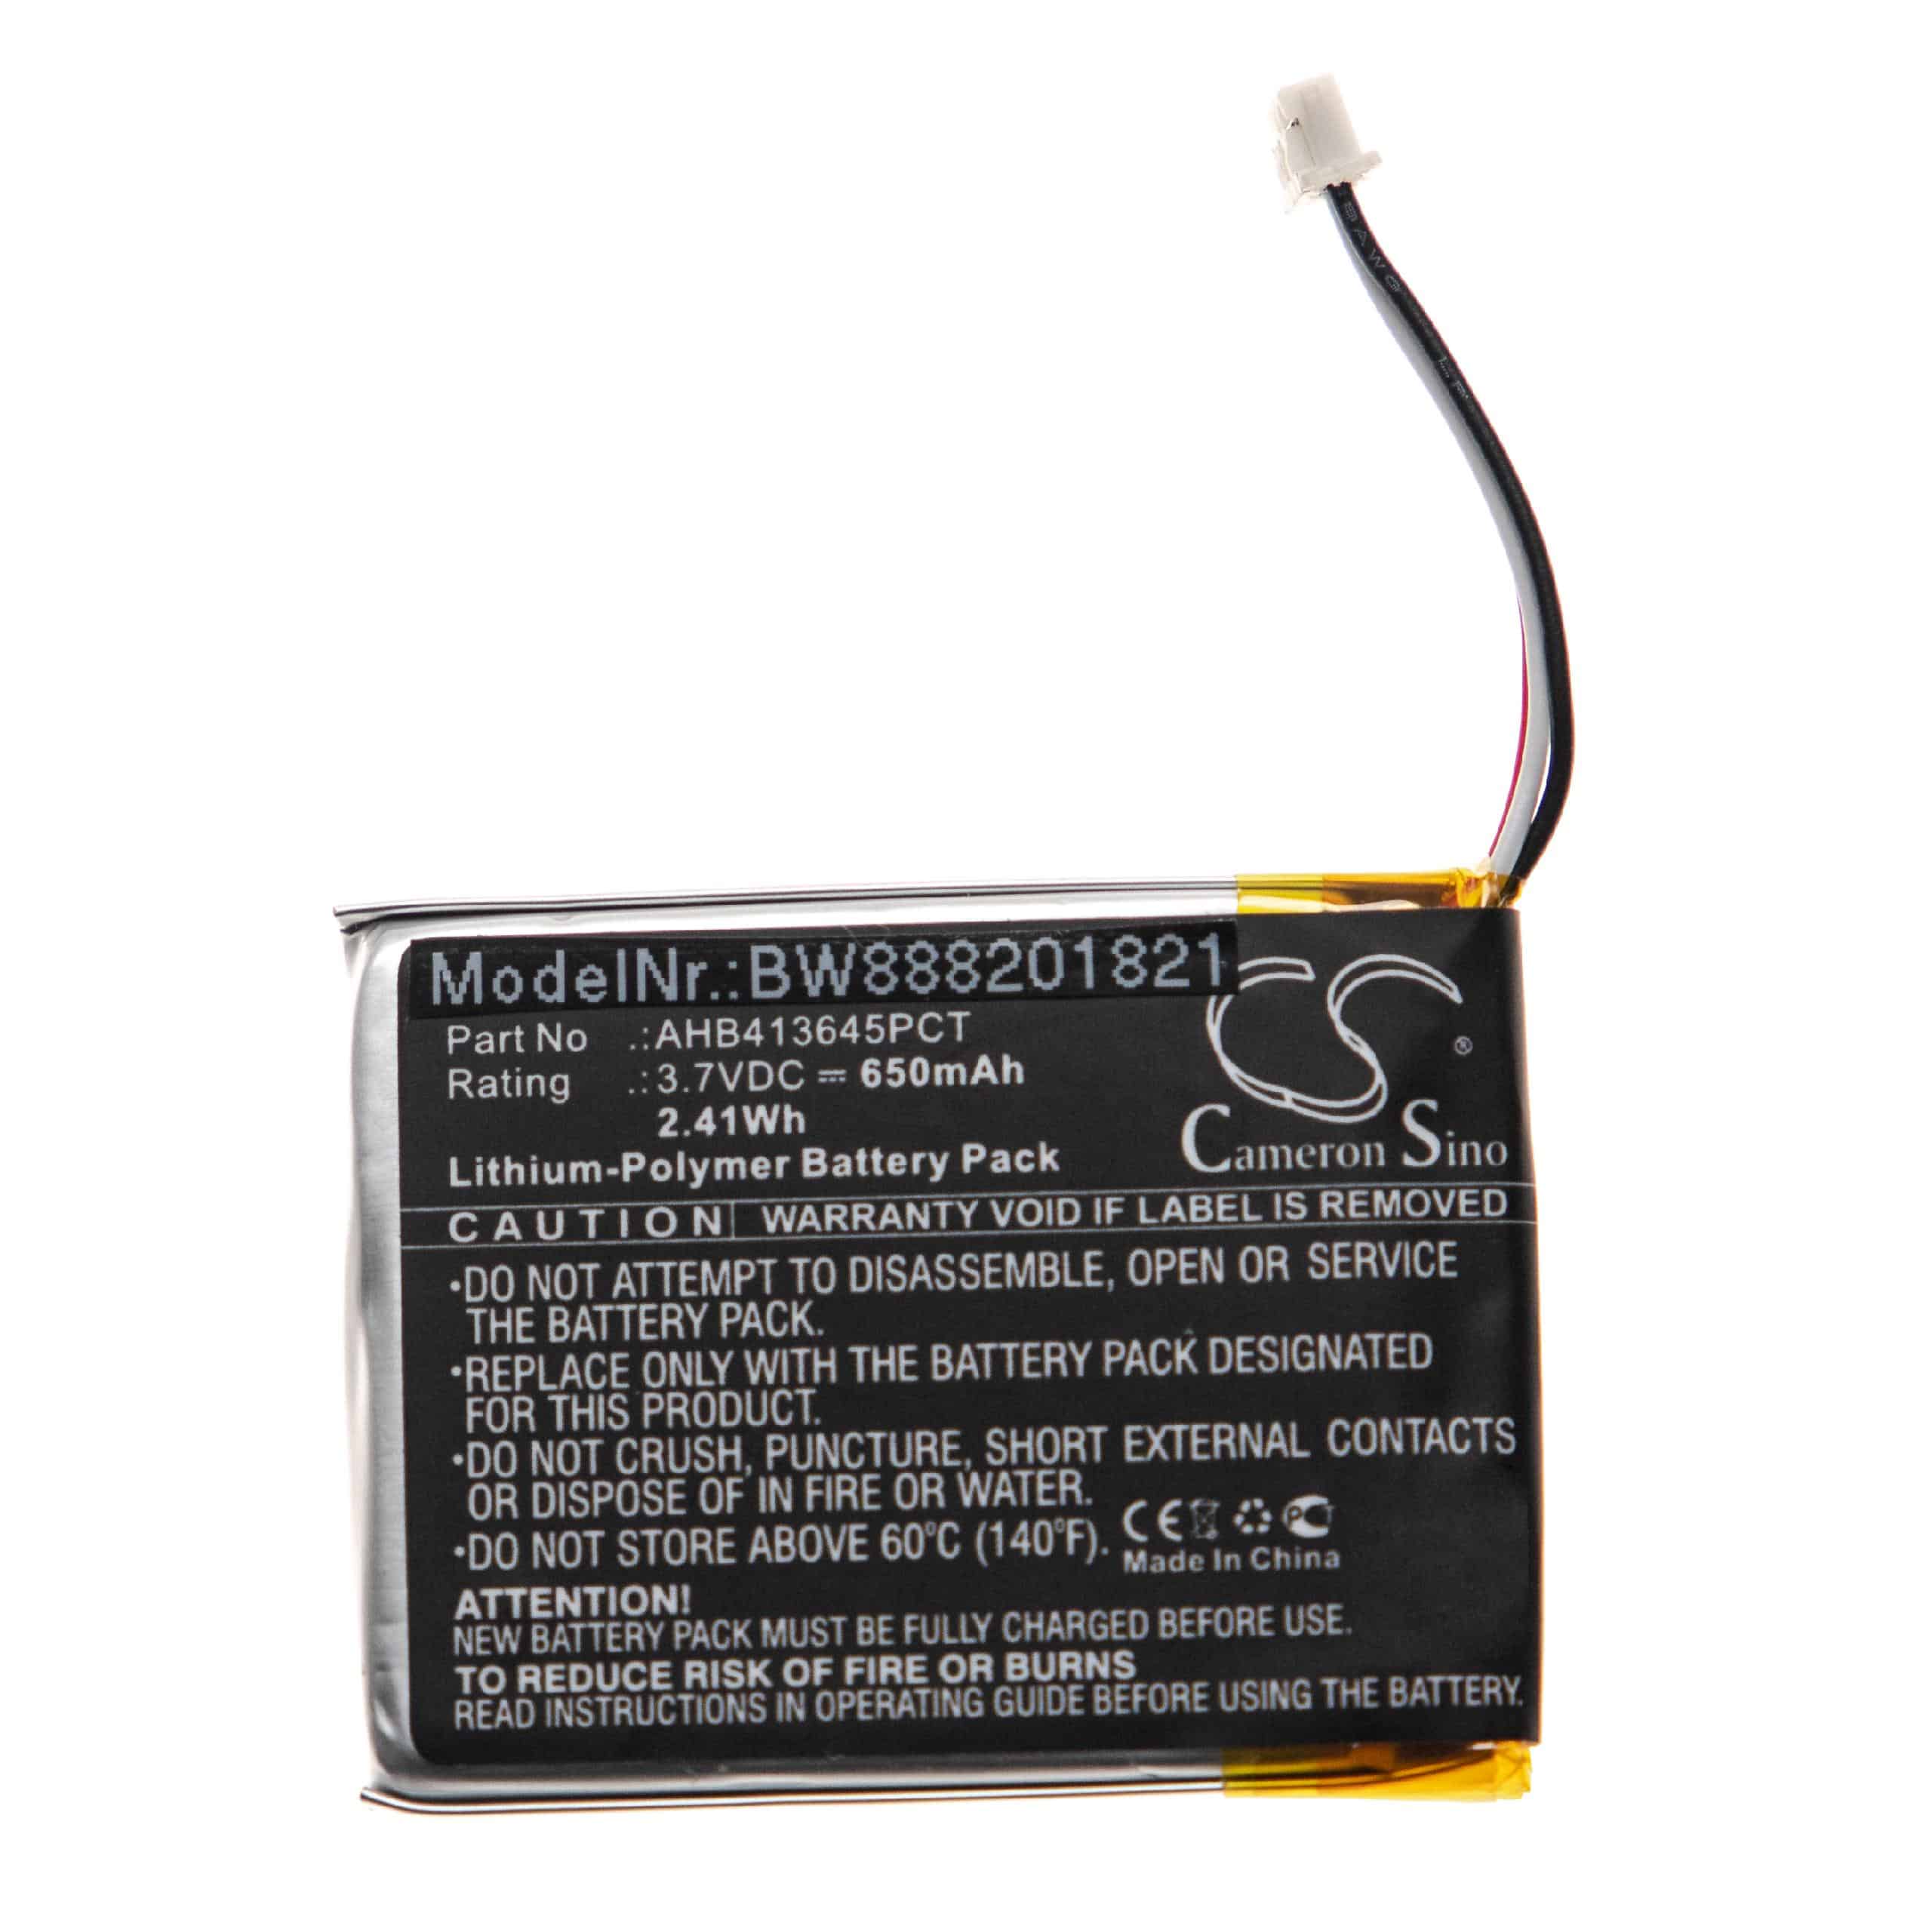 Wireless Headset Battery Replacement for Sennheiser AHB413645PCT, 507271-88 - 650mAh 3.7V Li-polymer